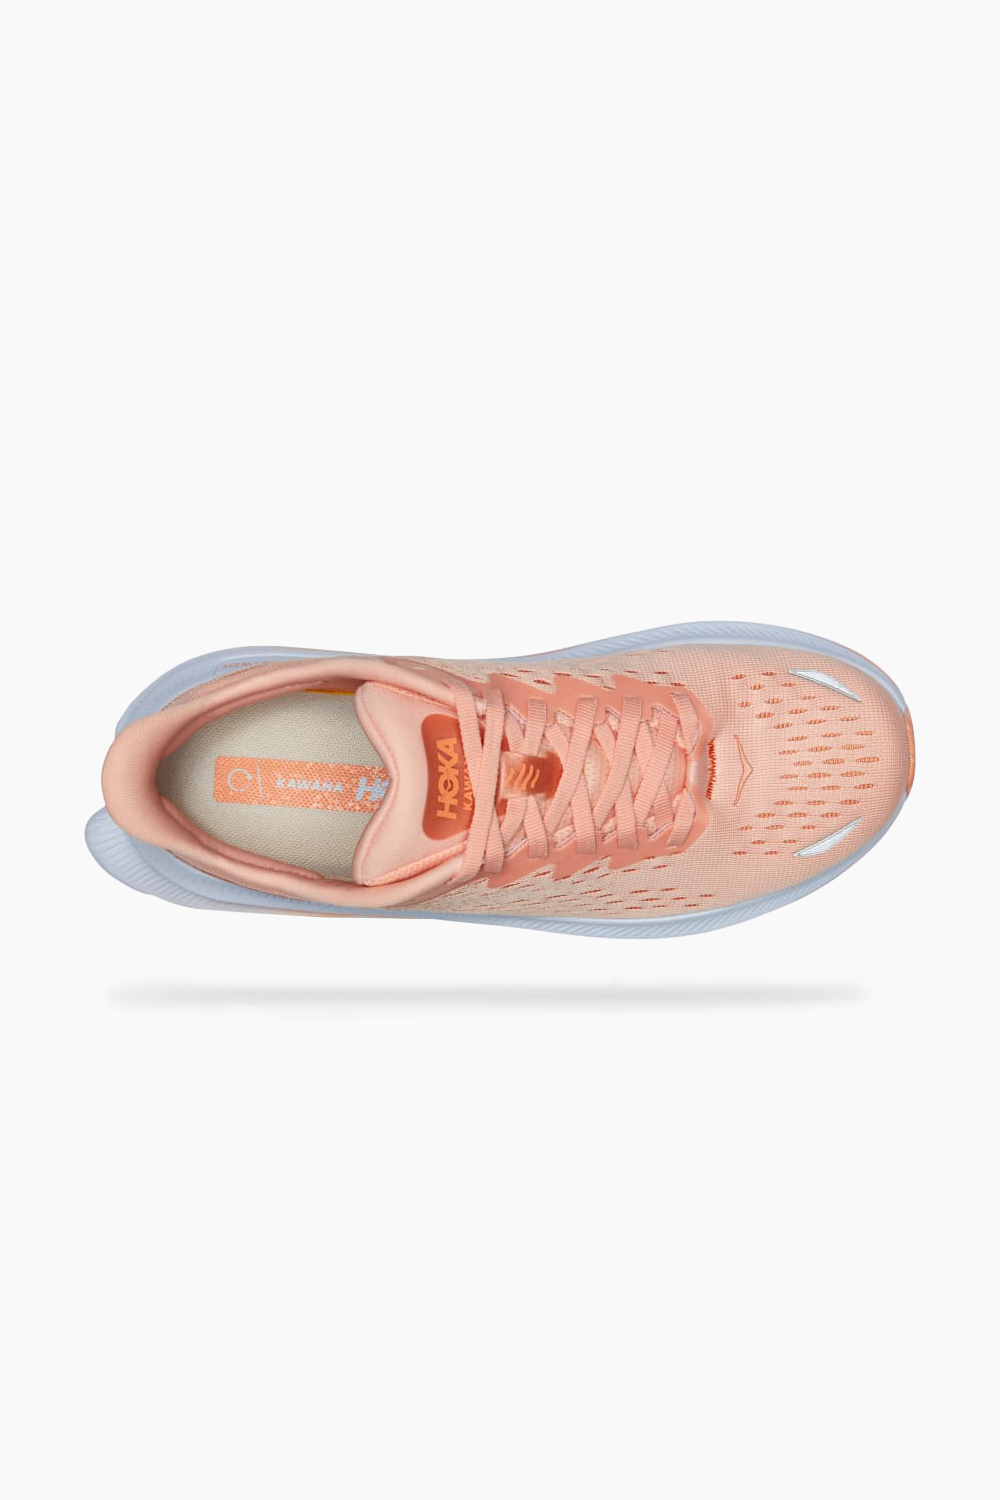 Hoka Women's Kawana Running Shoes in Peach Parfait/ Shell Coral